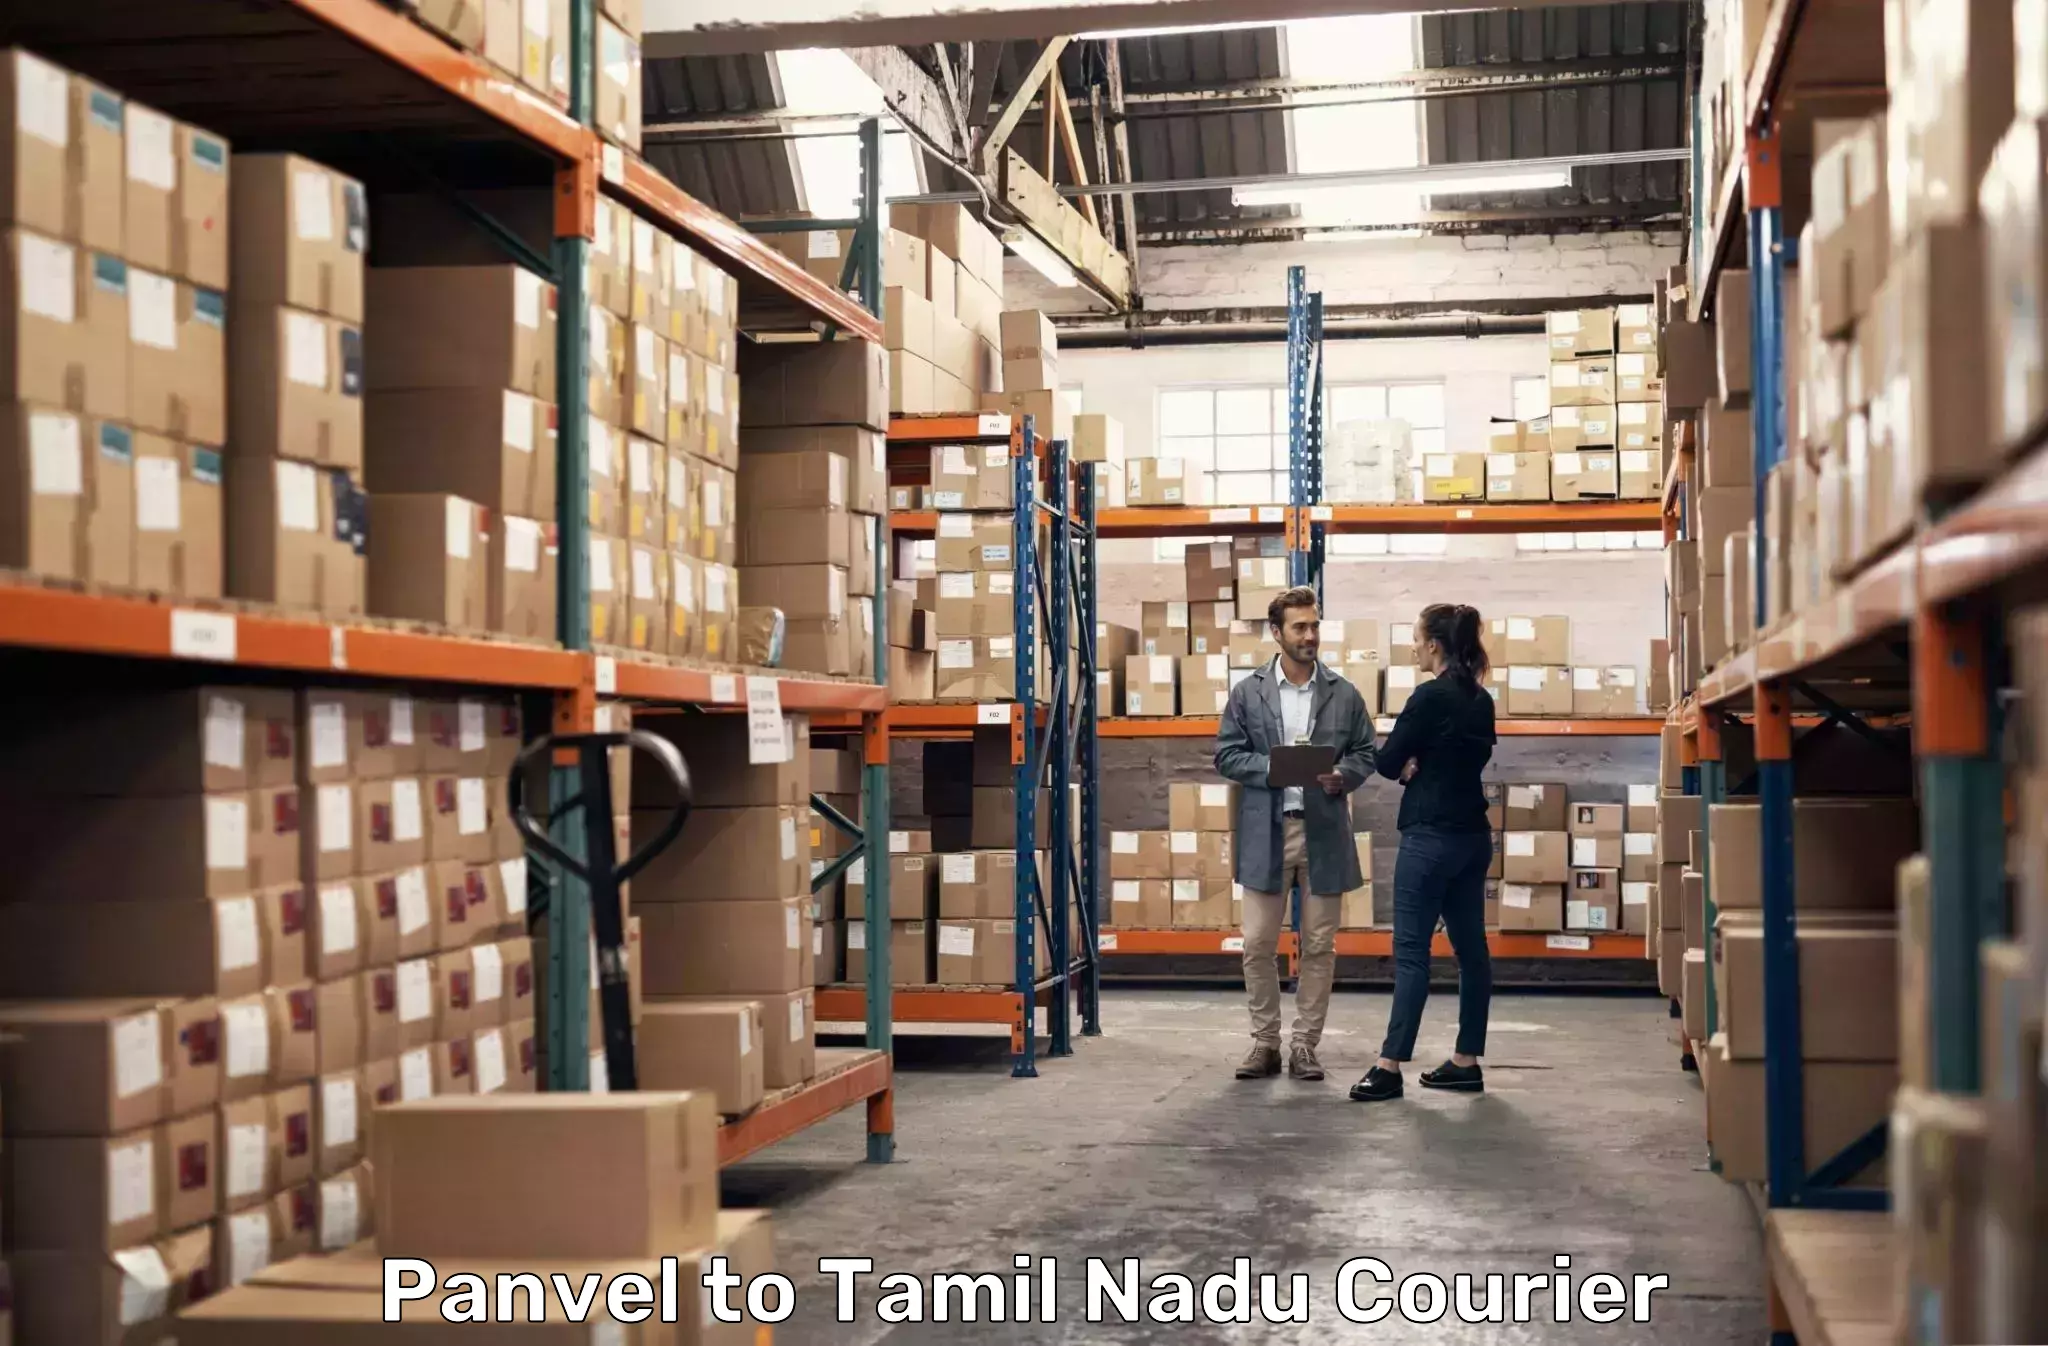 Sustainable courier practices Panvel to Thiruvadanai